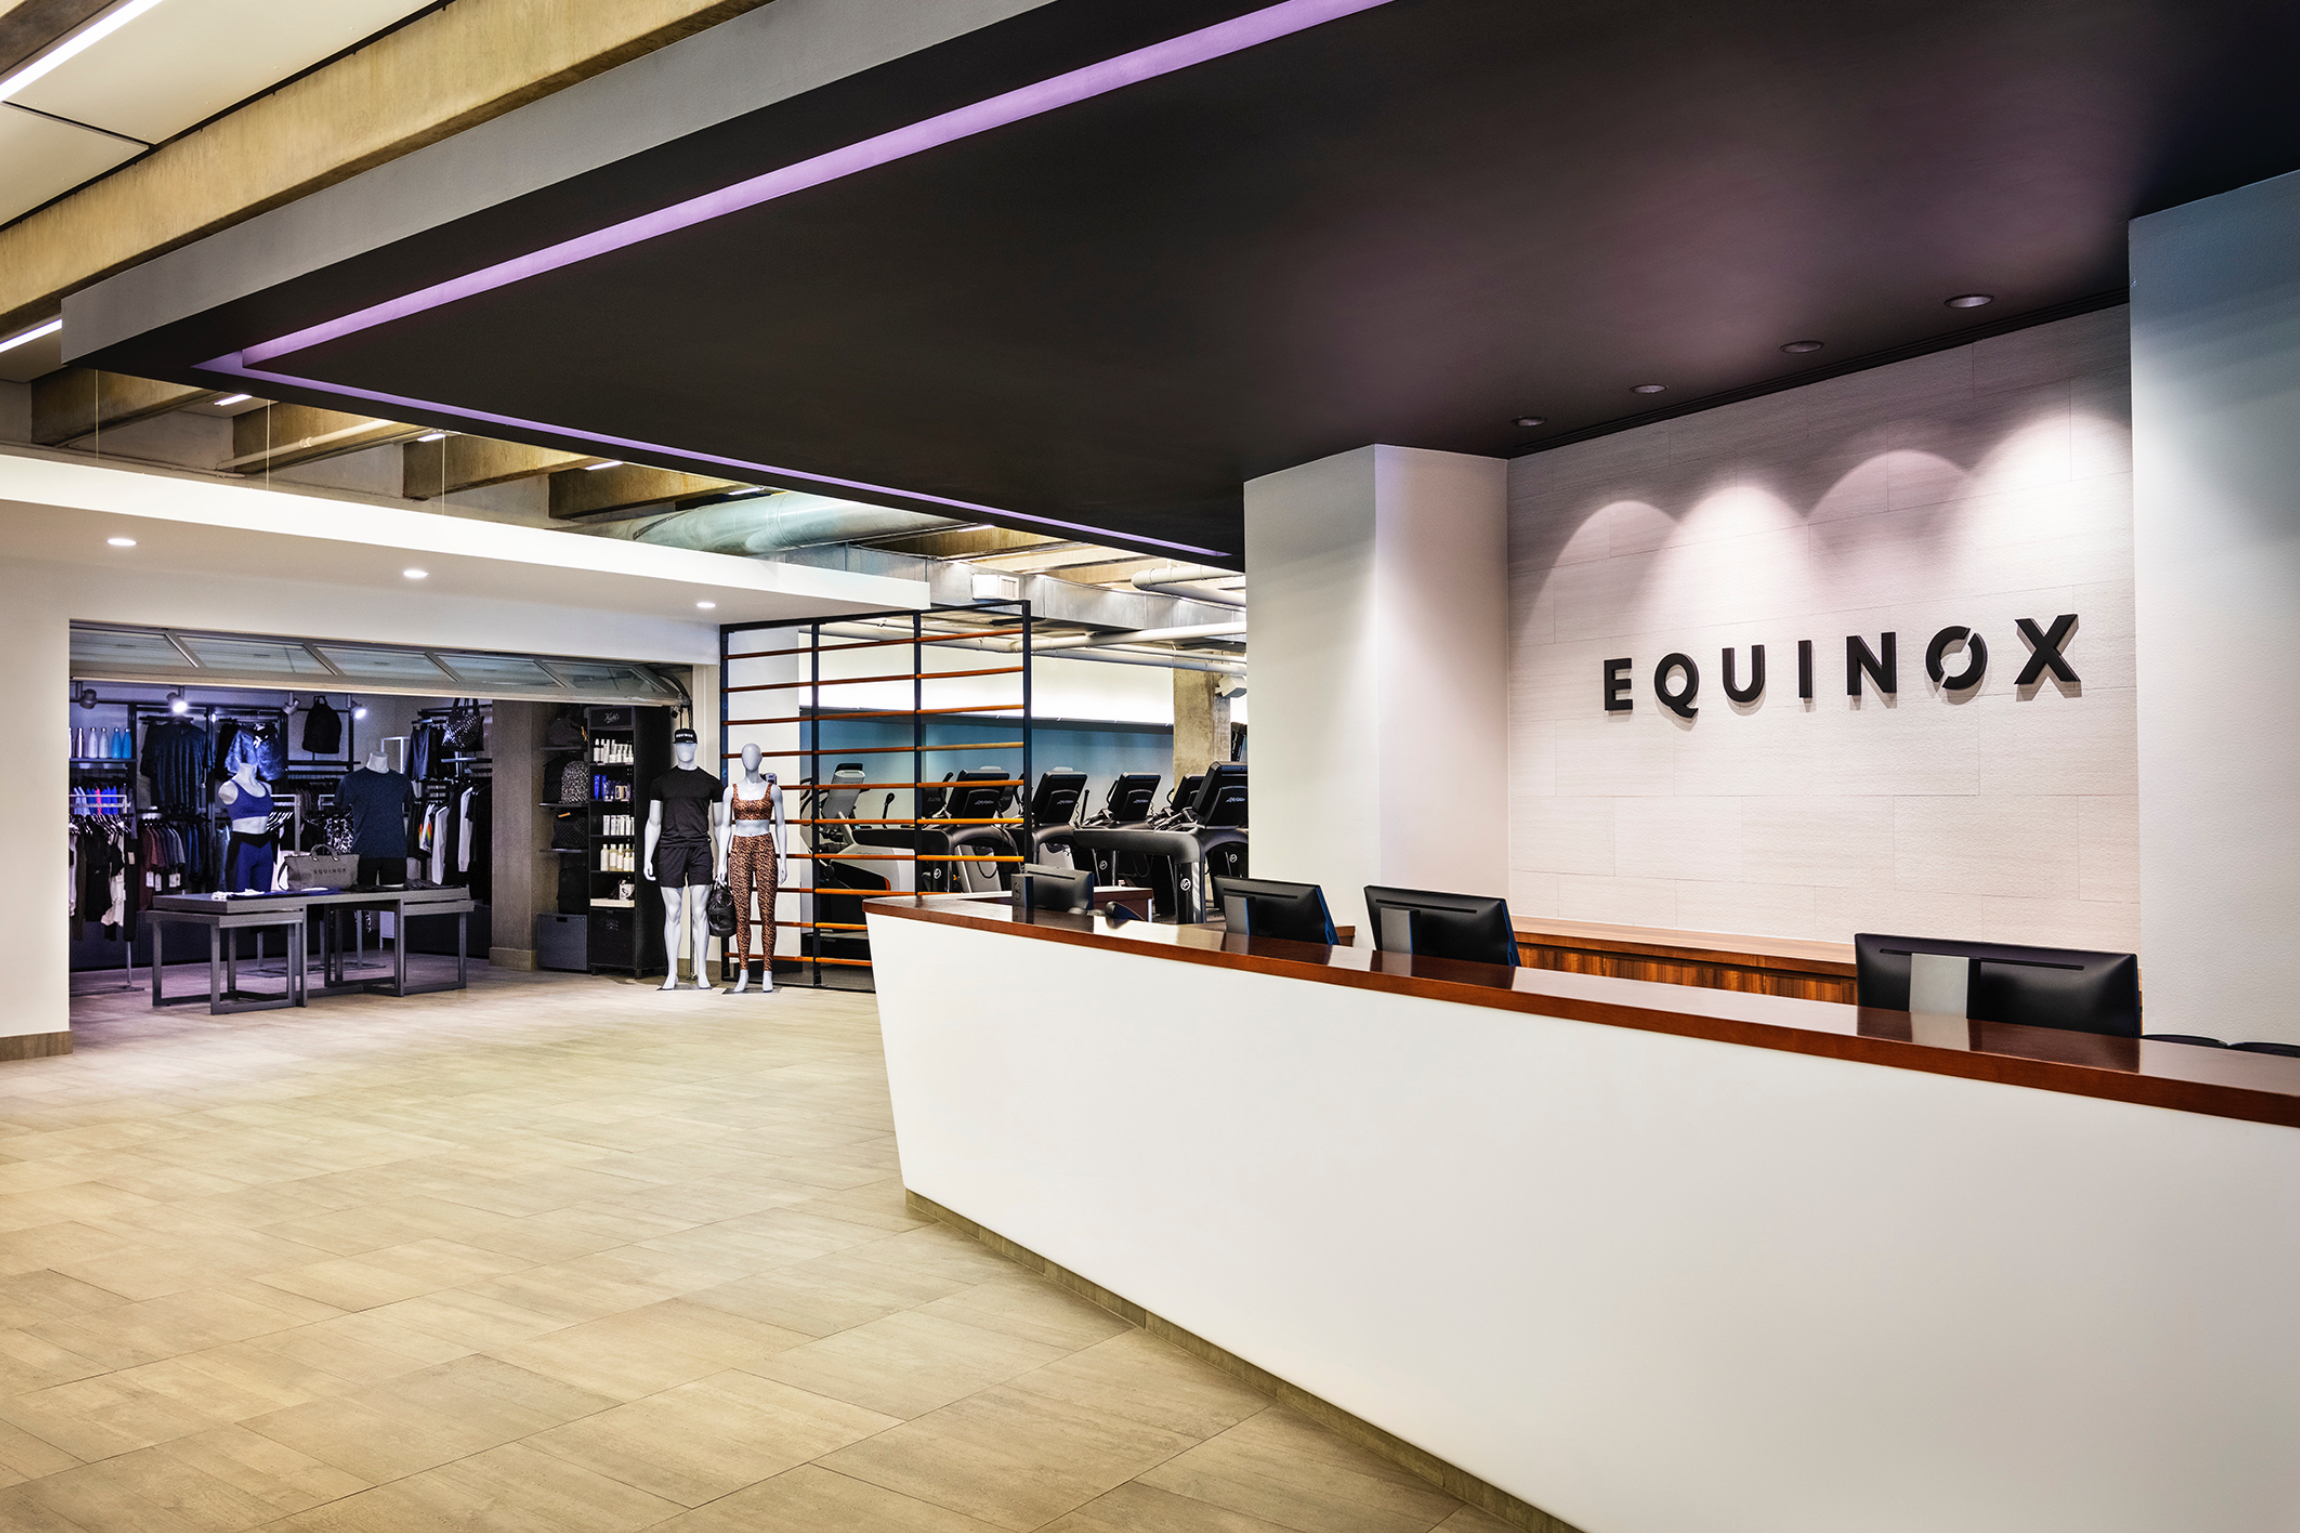 Equinox Luxury Fitness Club - It's Not Fitness, It's Life